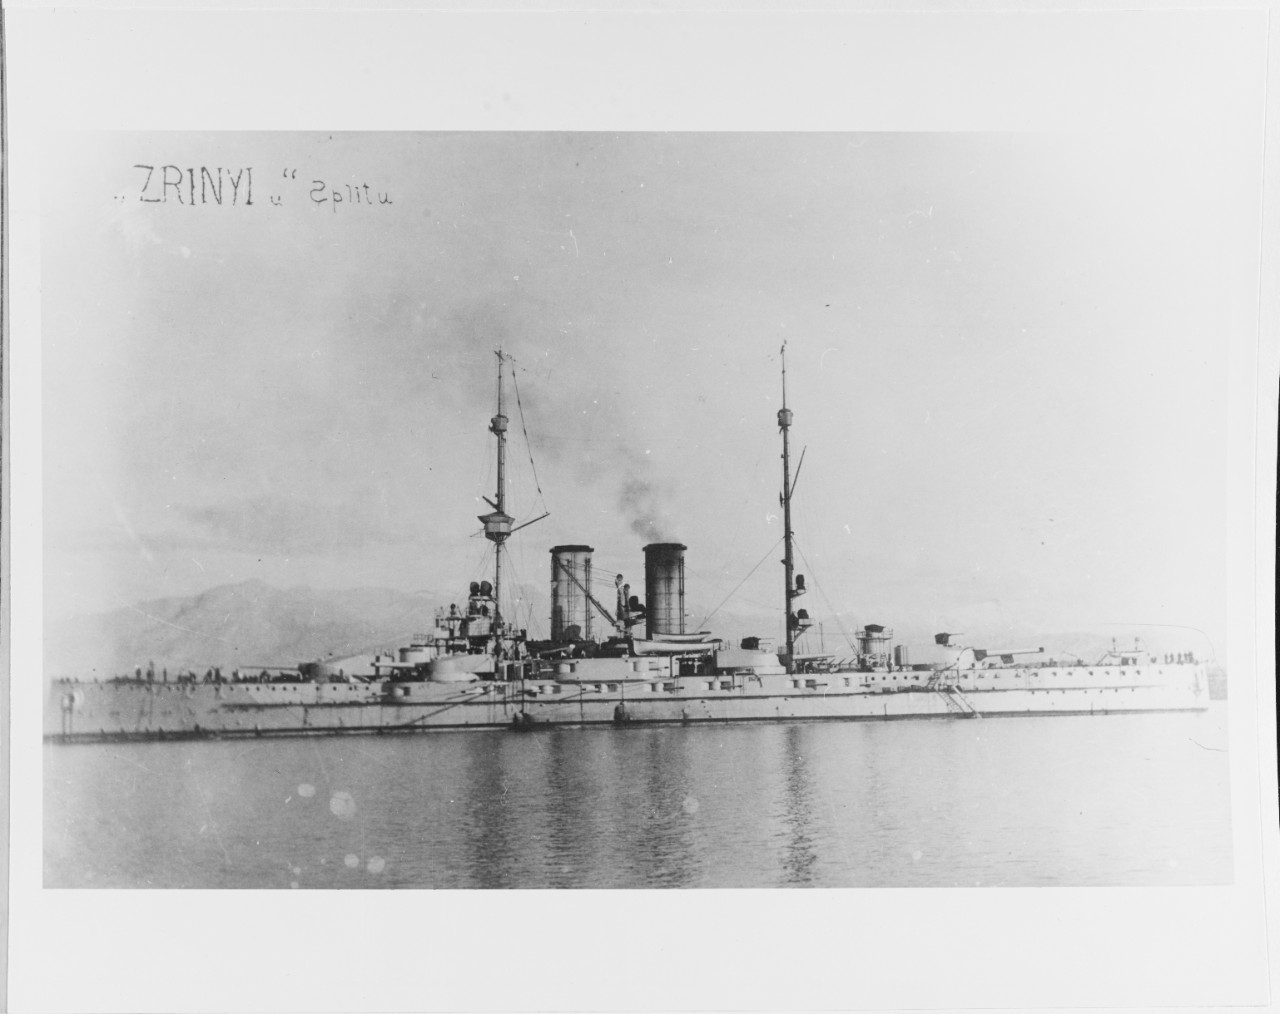 ARINYI (Austrian battleship, 1910)